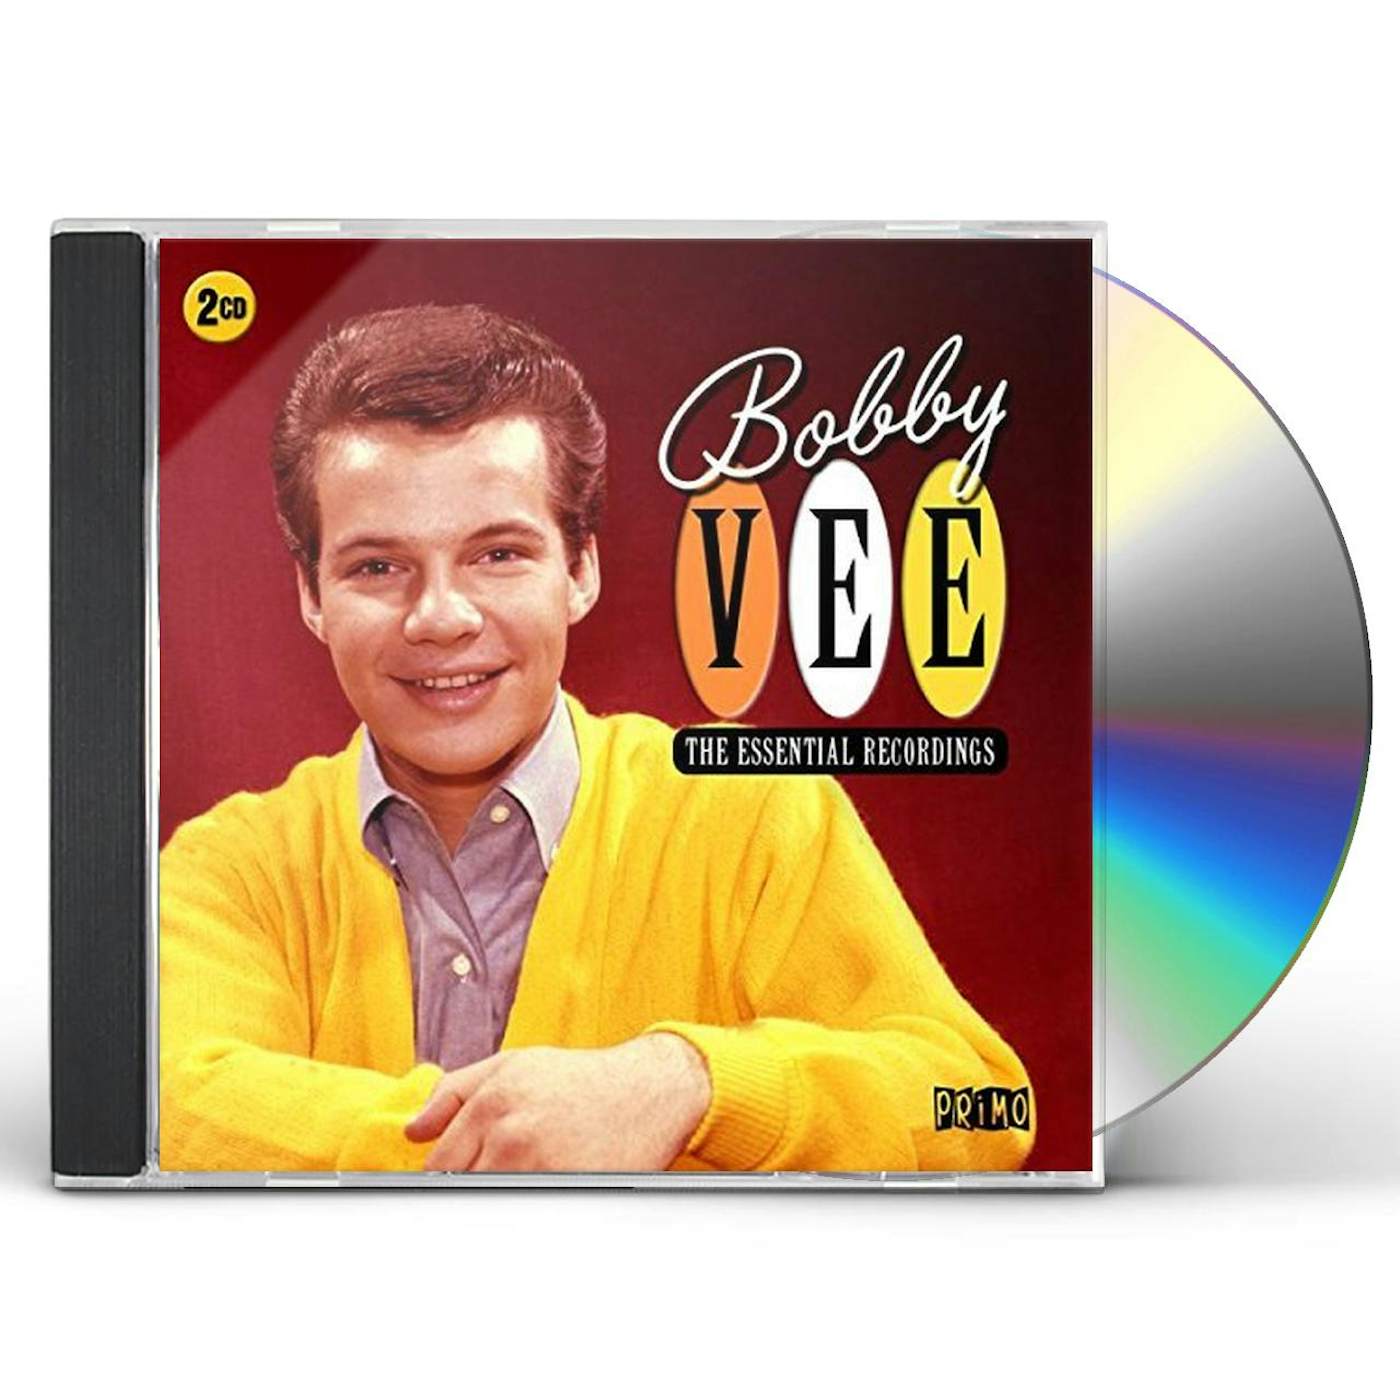 Bobby Vee ESSENTIAL RECORDINGS CD